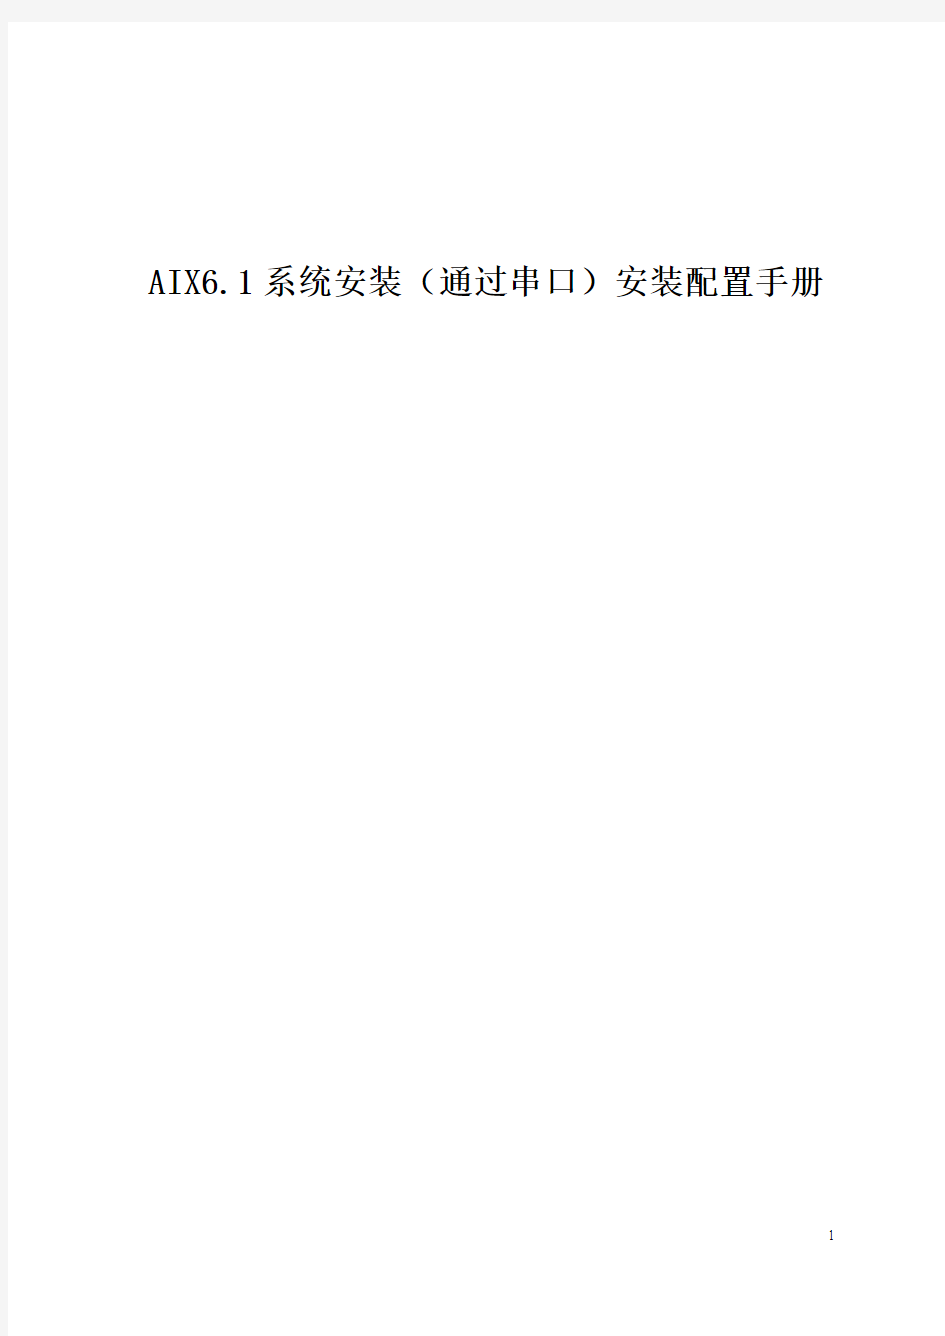 AIX6.1系统安装(串口)安装和配置手册